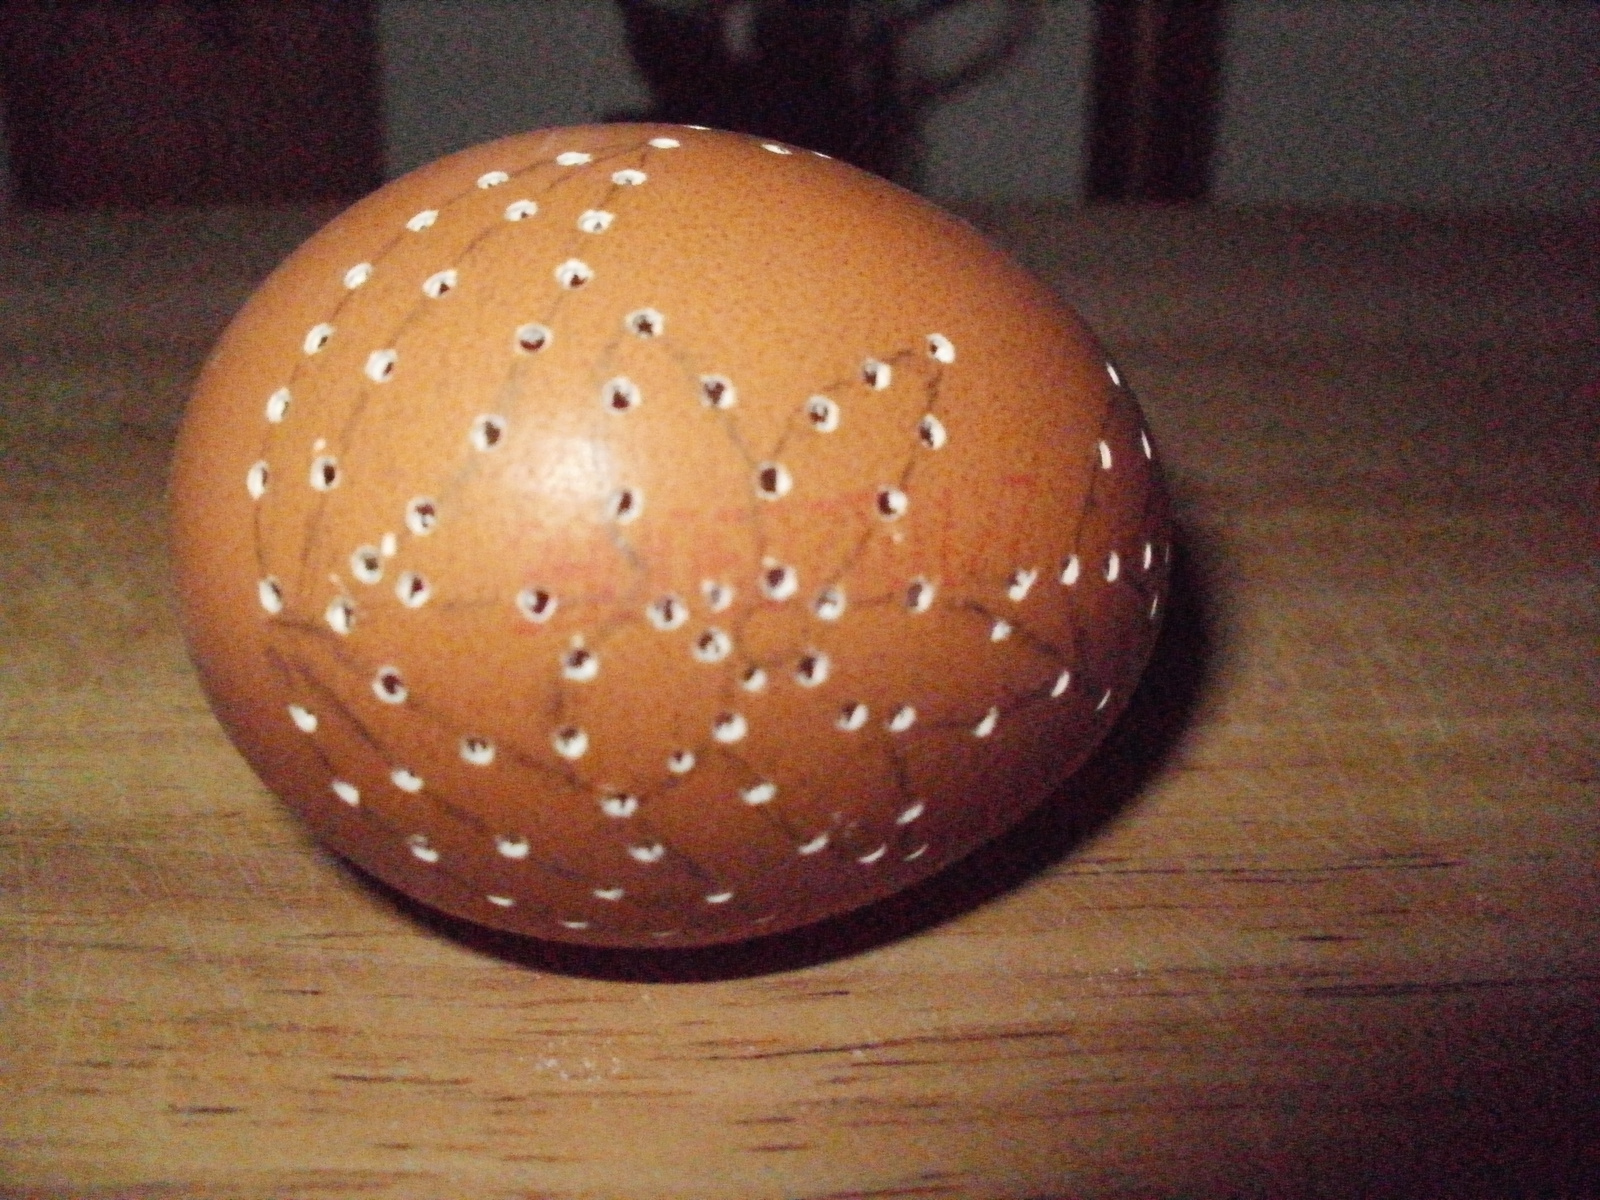 Kifúrt tojás